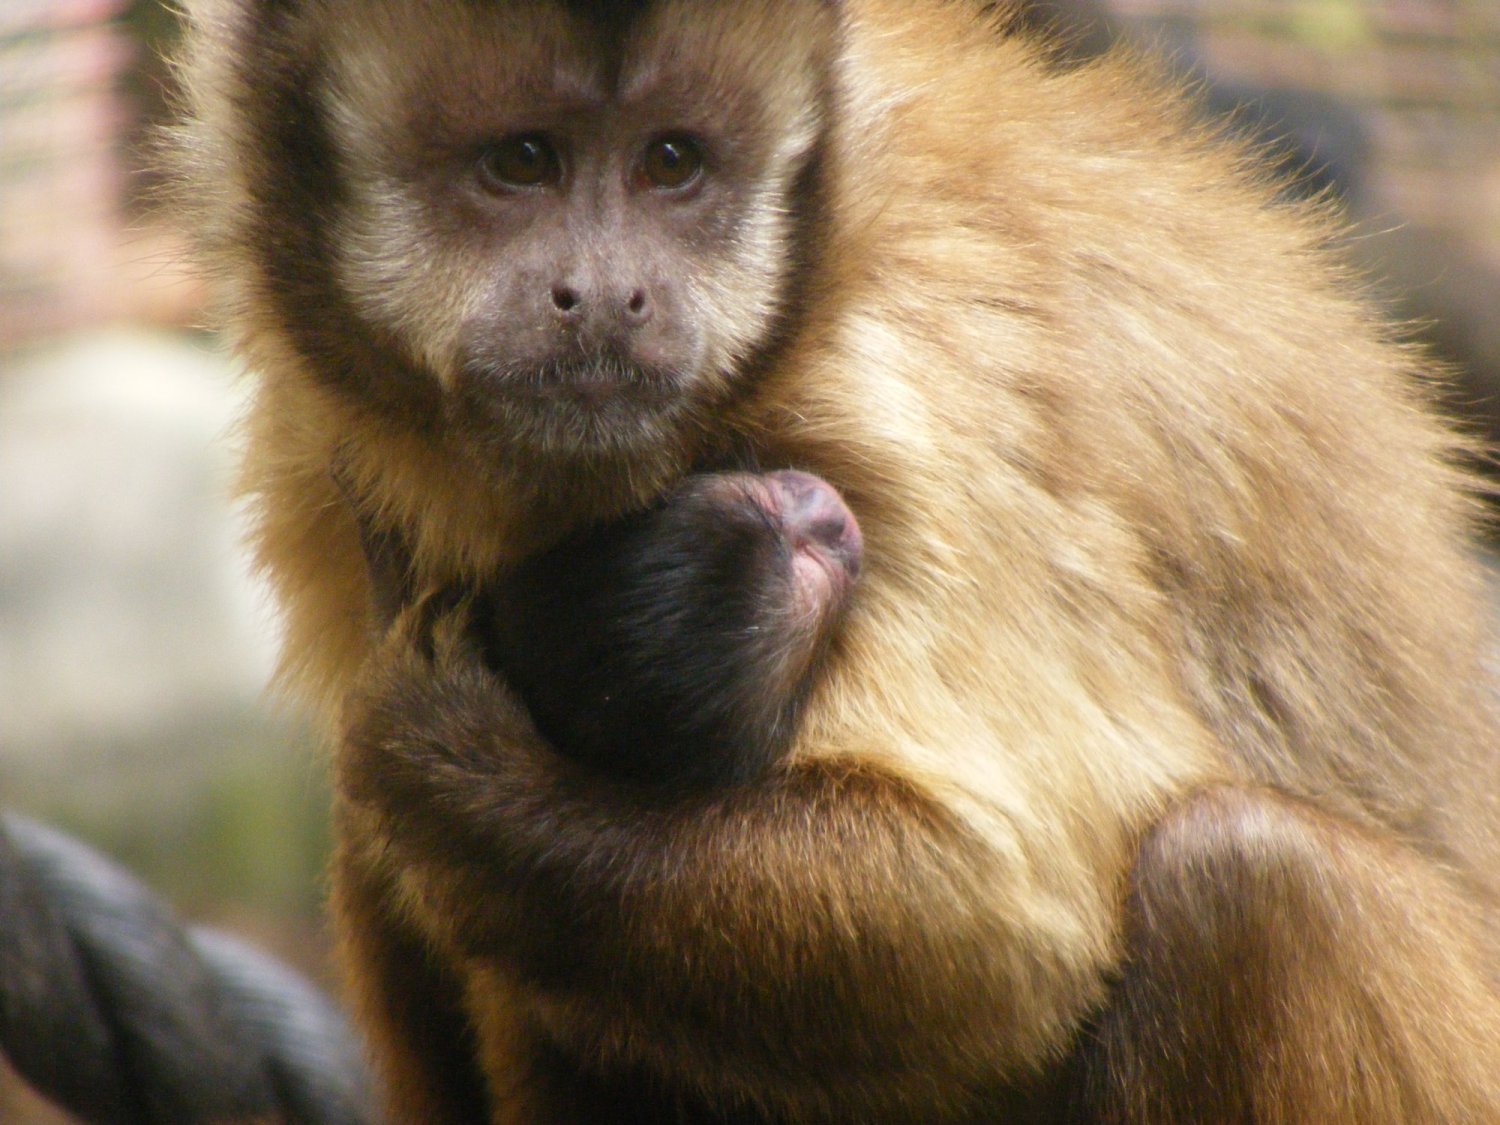 Baby Capuchin Monkey: aww